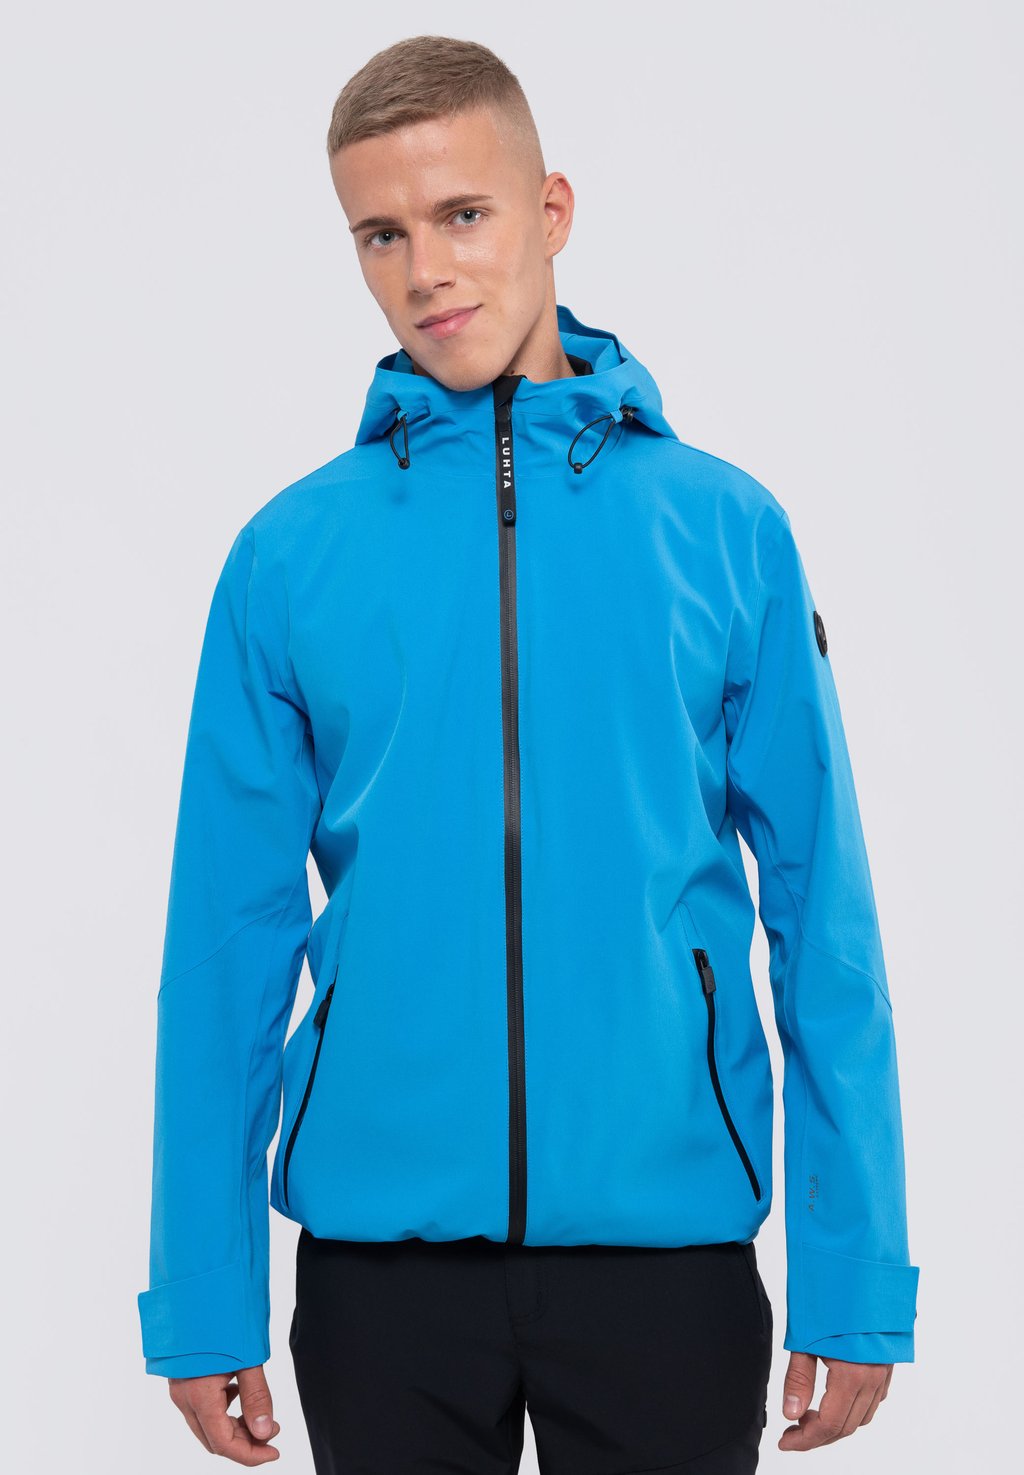 Дождевик/водоотталкивающая куртка JOKIPOHJA Luhta, цвет himmelblau дождевик водоотталкивающая куртка eiriken luhta цвет dunkel blau